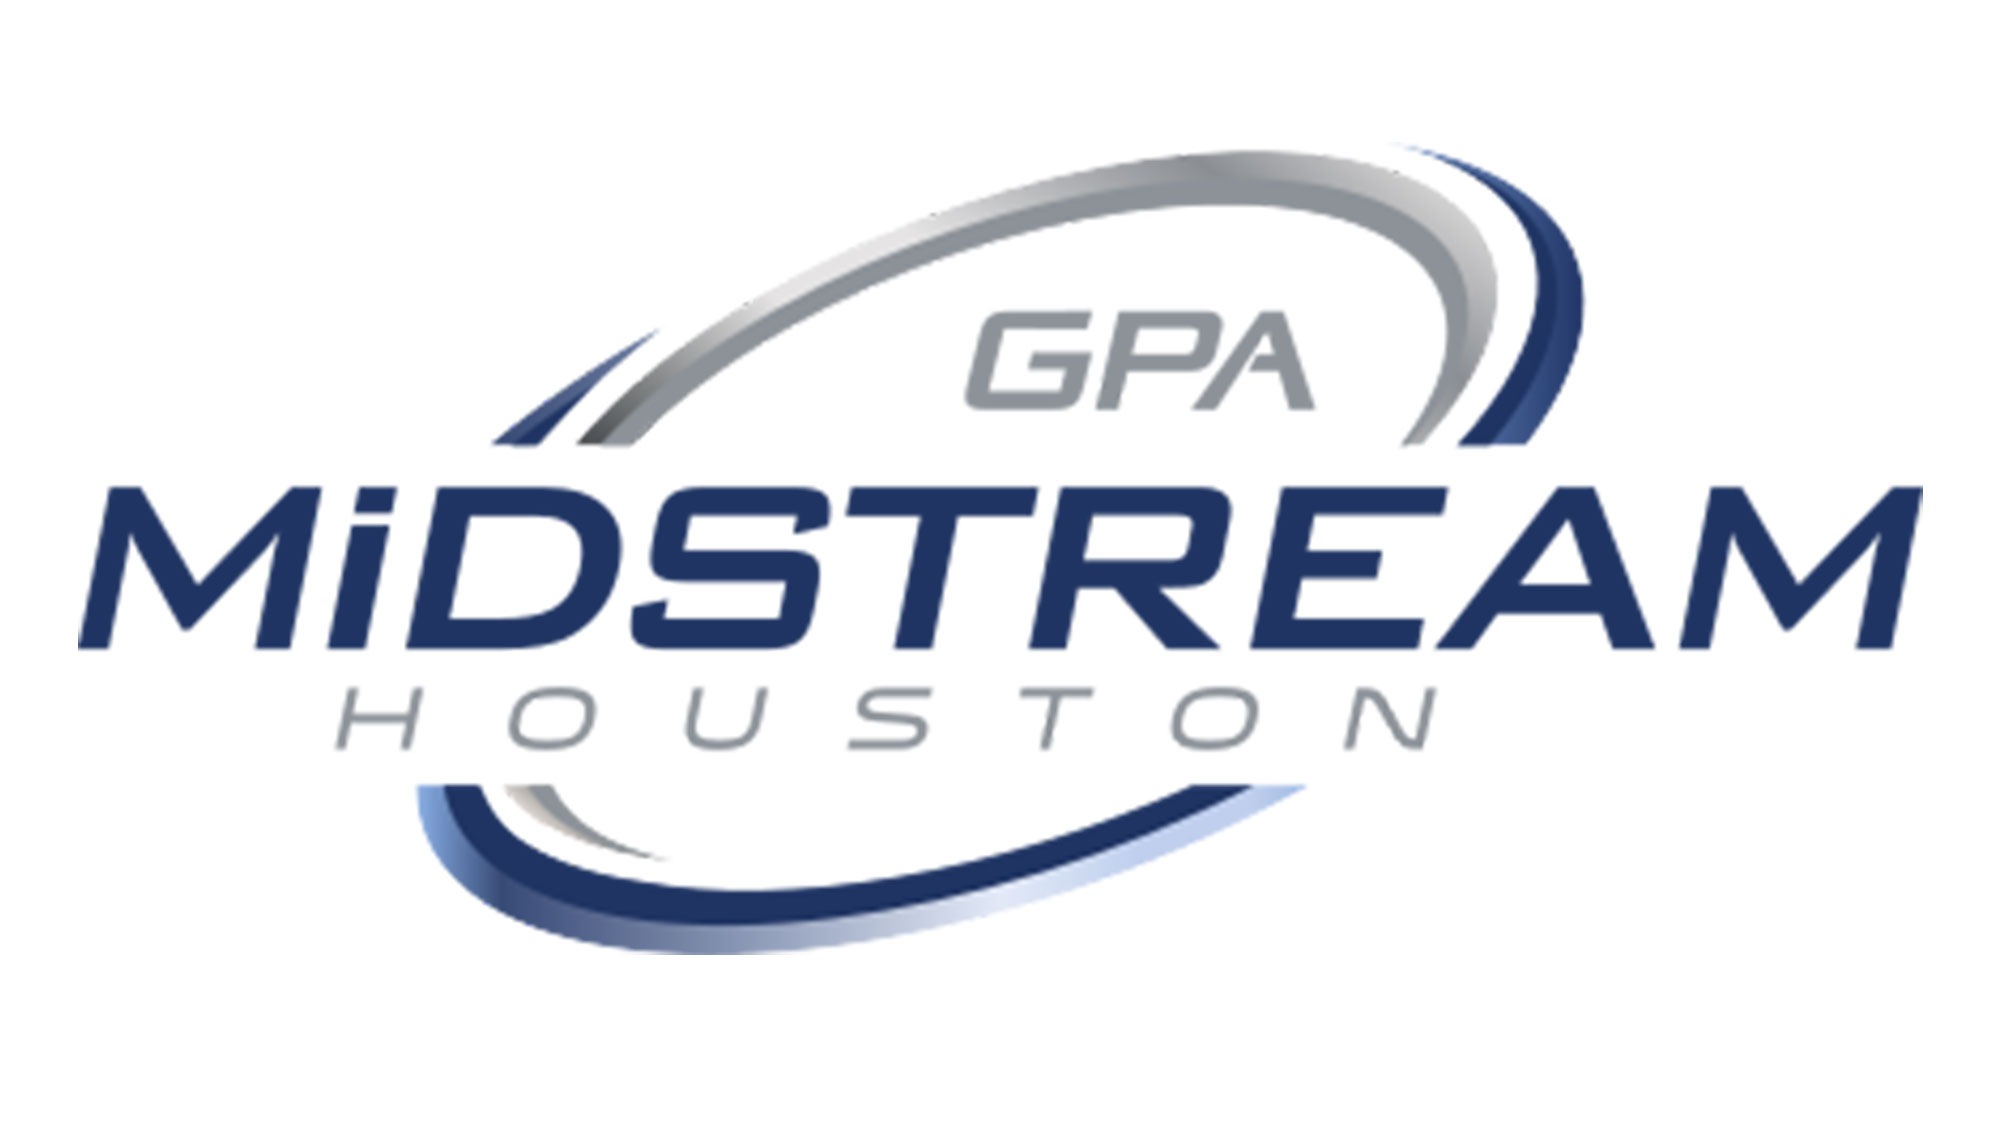 Houston GPA Midstream Association